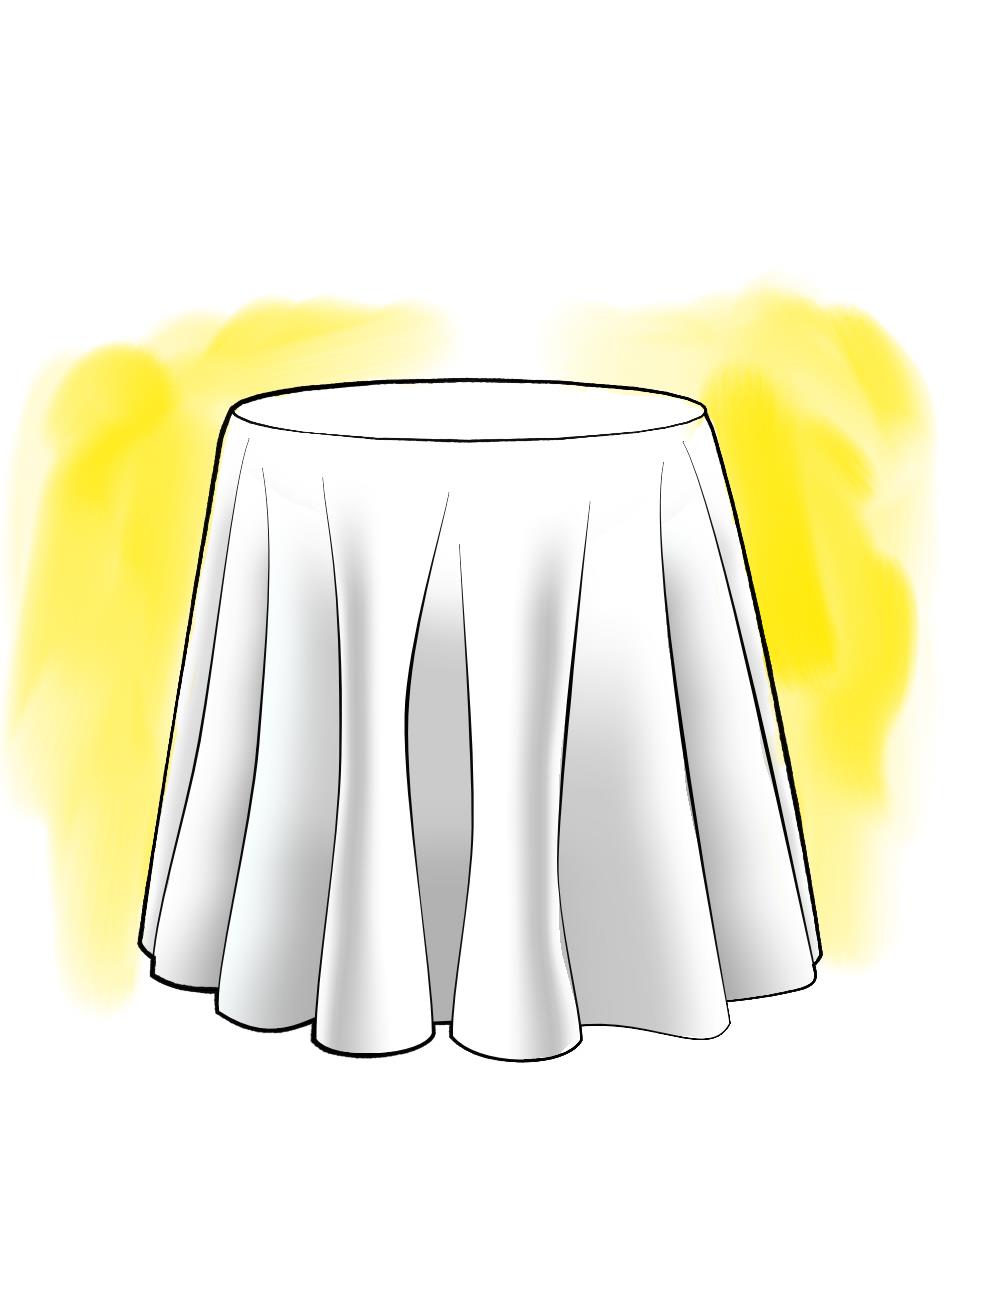 round tablecloth in anderson brazilian yellow buffalo check plaid